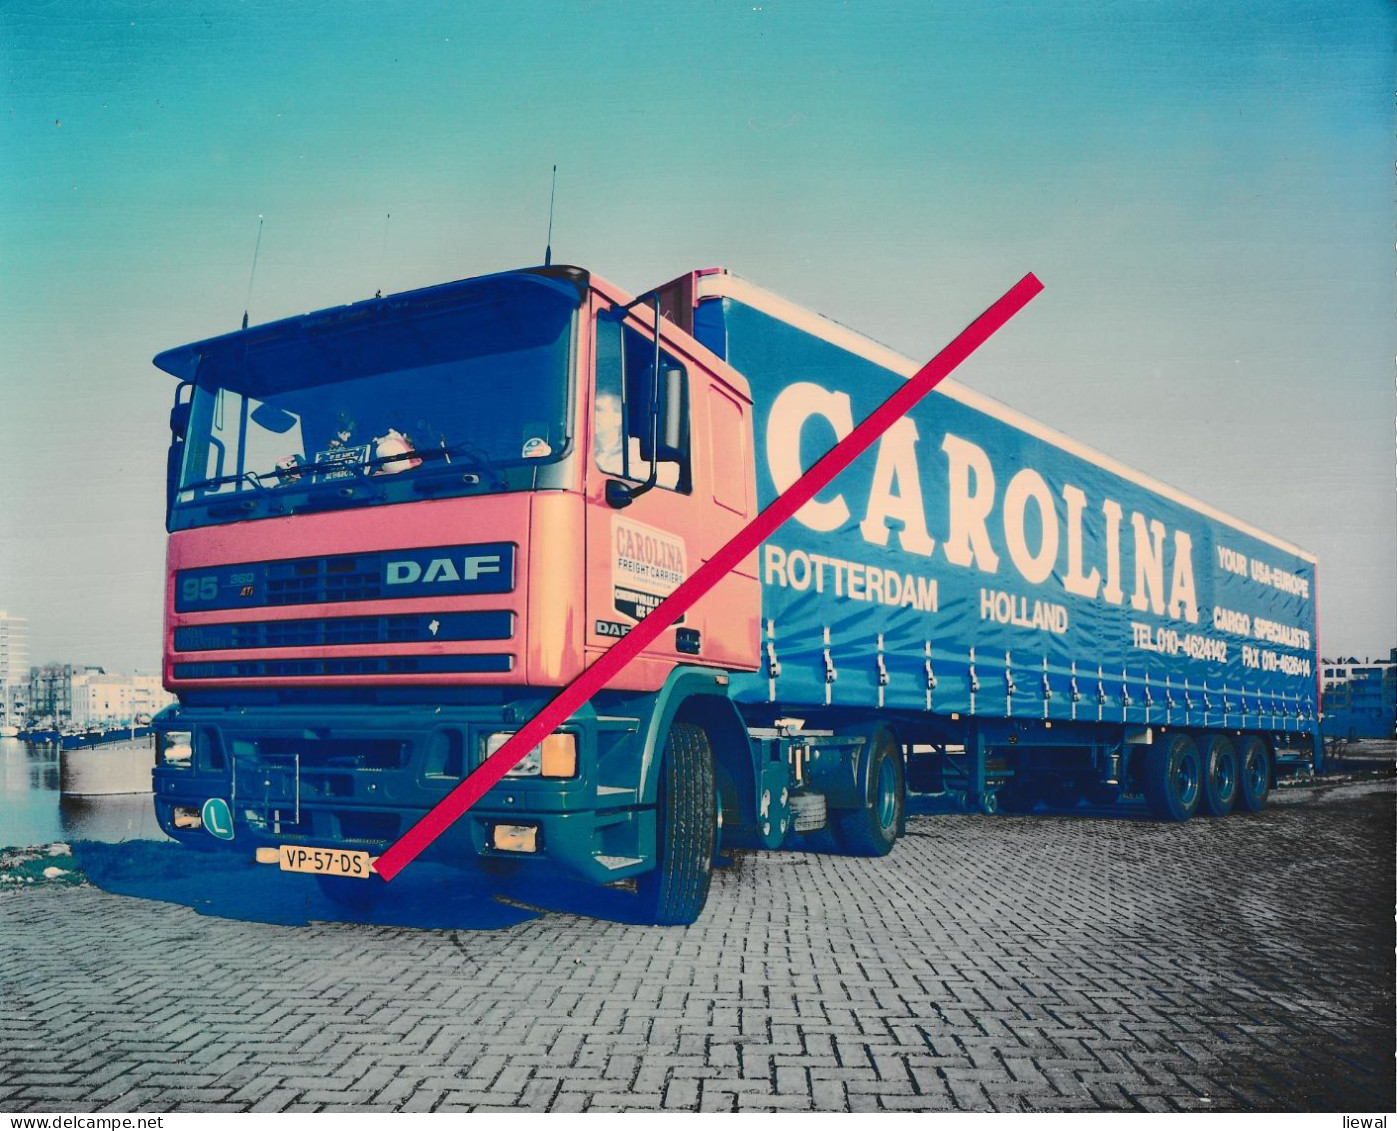 Carolina freight corporation. History 1932-1985. Cherryville North Carolina.